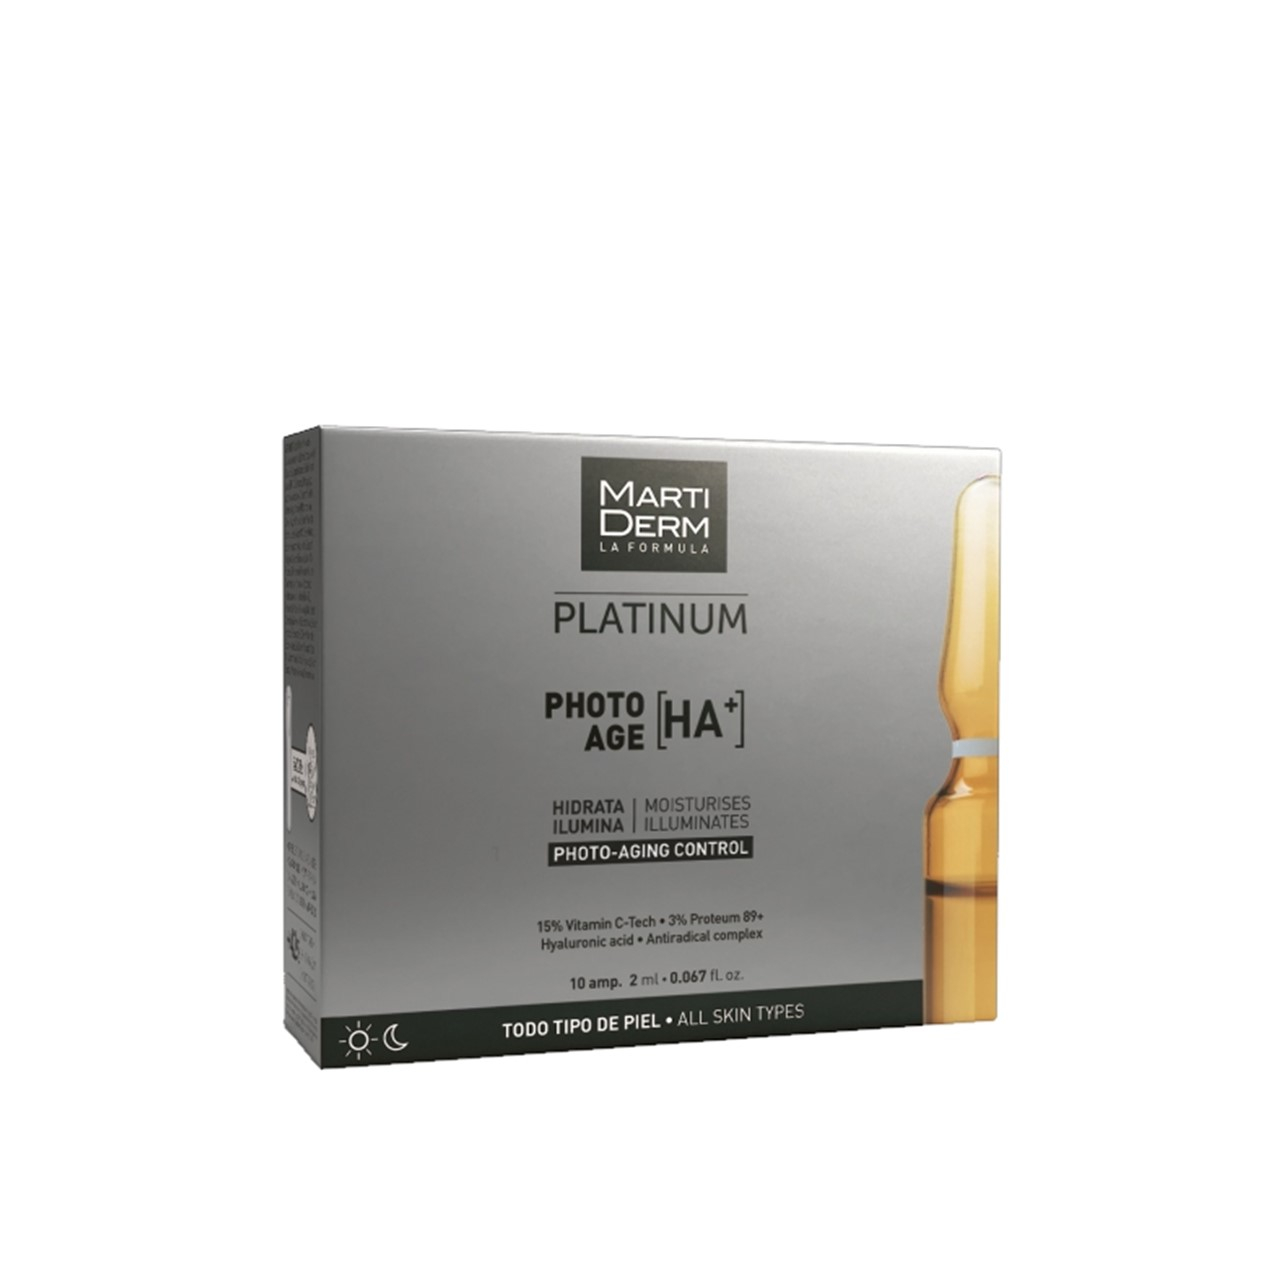 Martiderm Platinum Photo Age [HA+] 10x2ml (10x0.07fl oz)